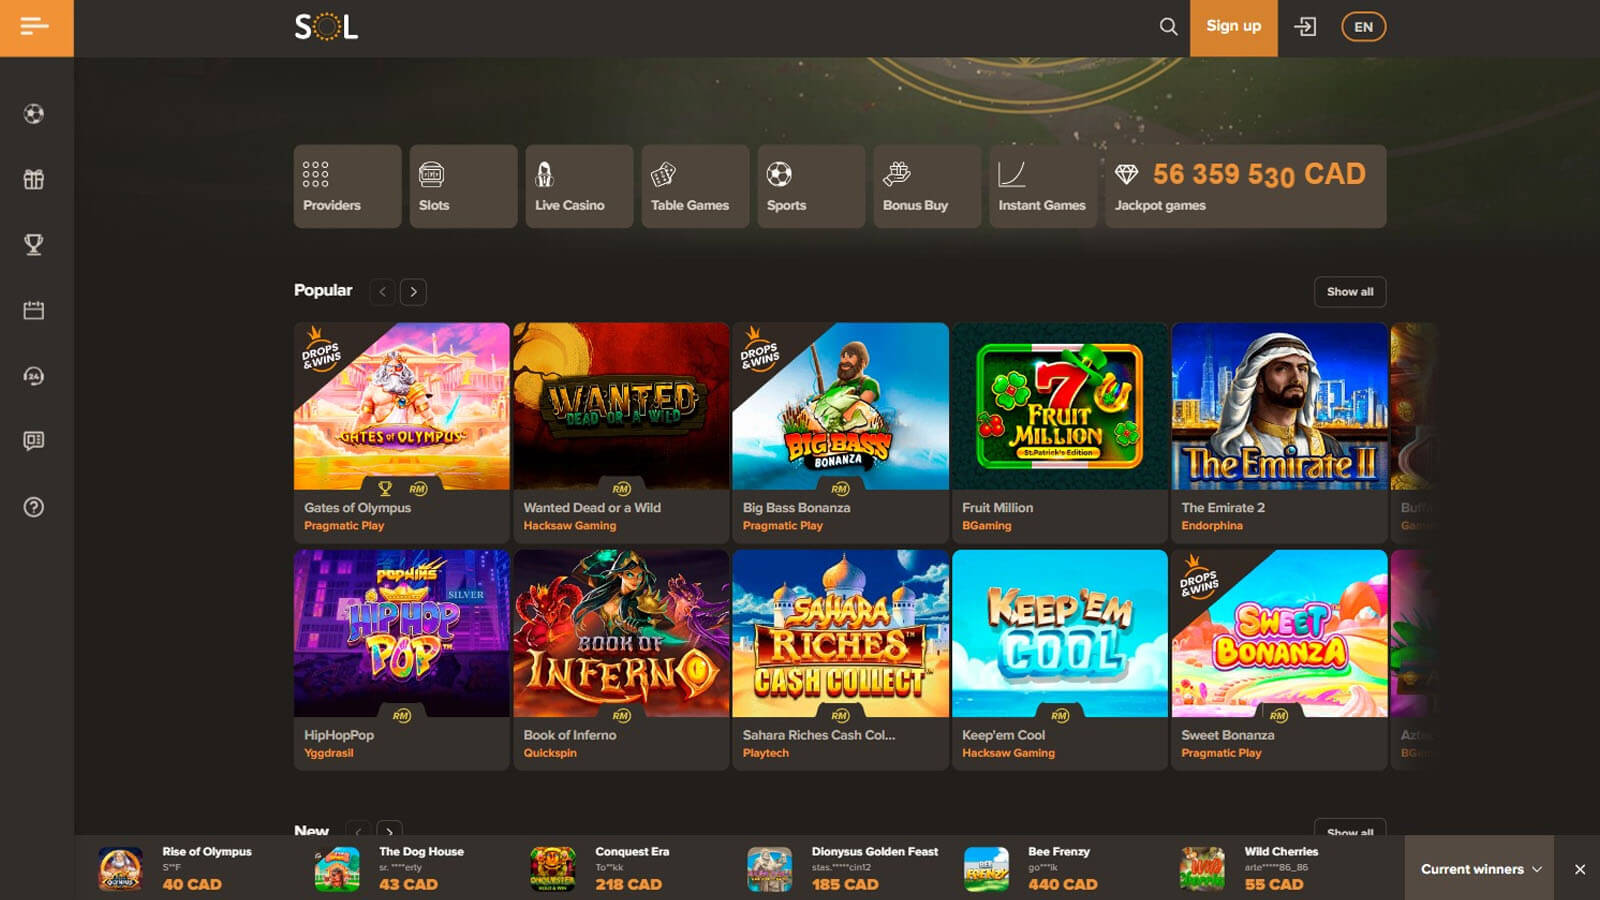 Sol Casino #3. Best casino online Brazil site for Playtech live games